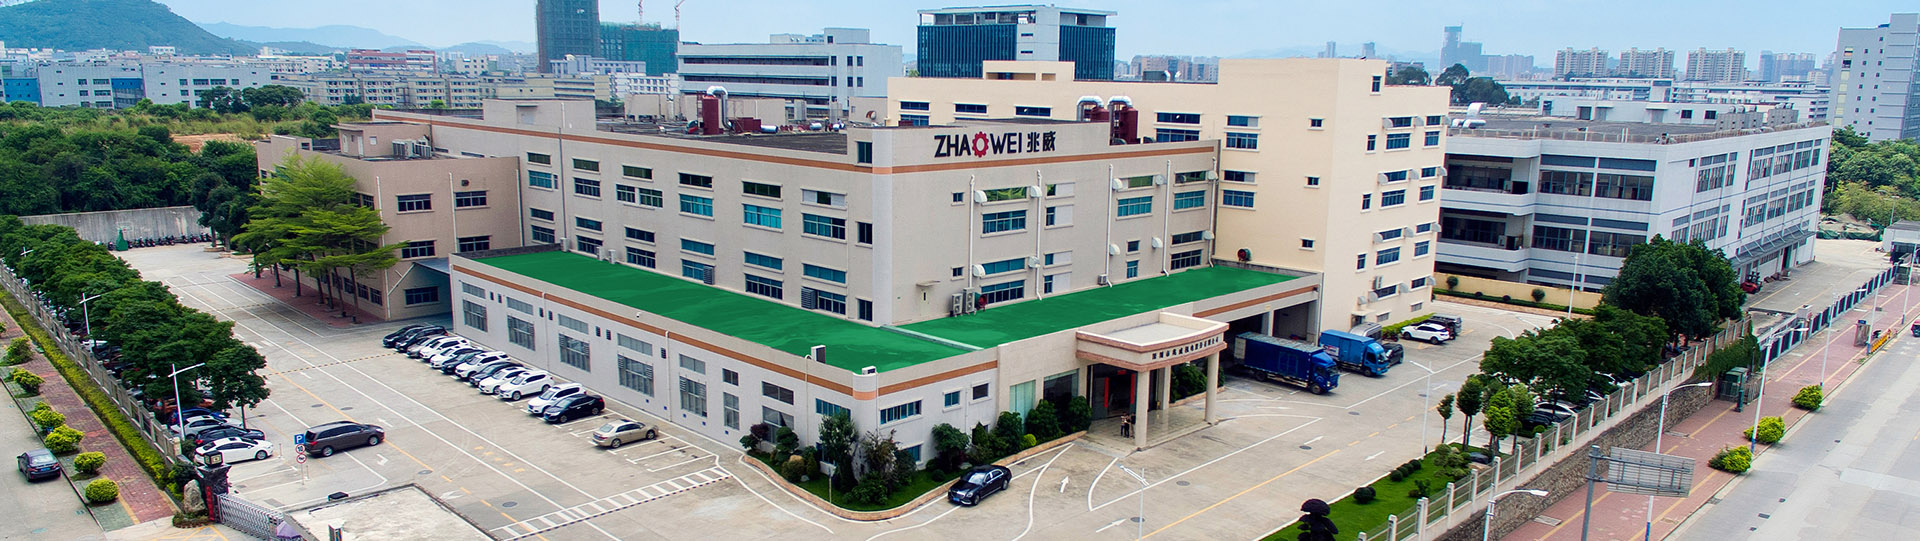 Zhaowei Machinery & Electronics Co., Ltd.